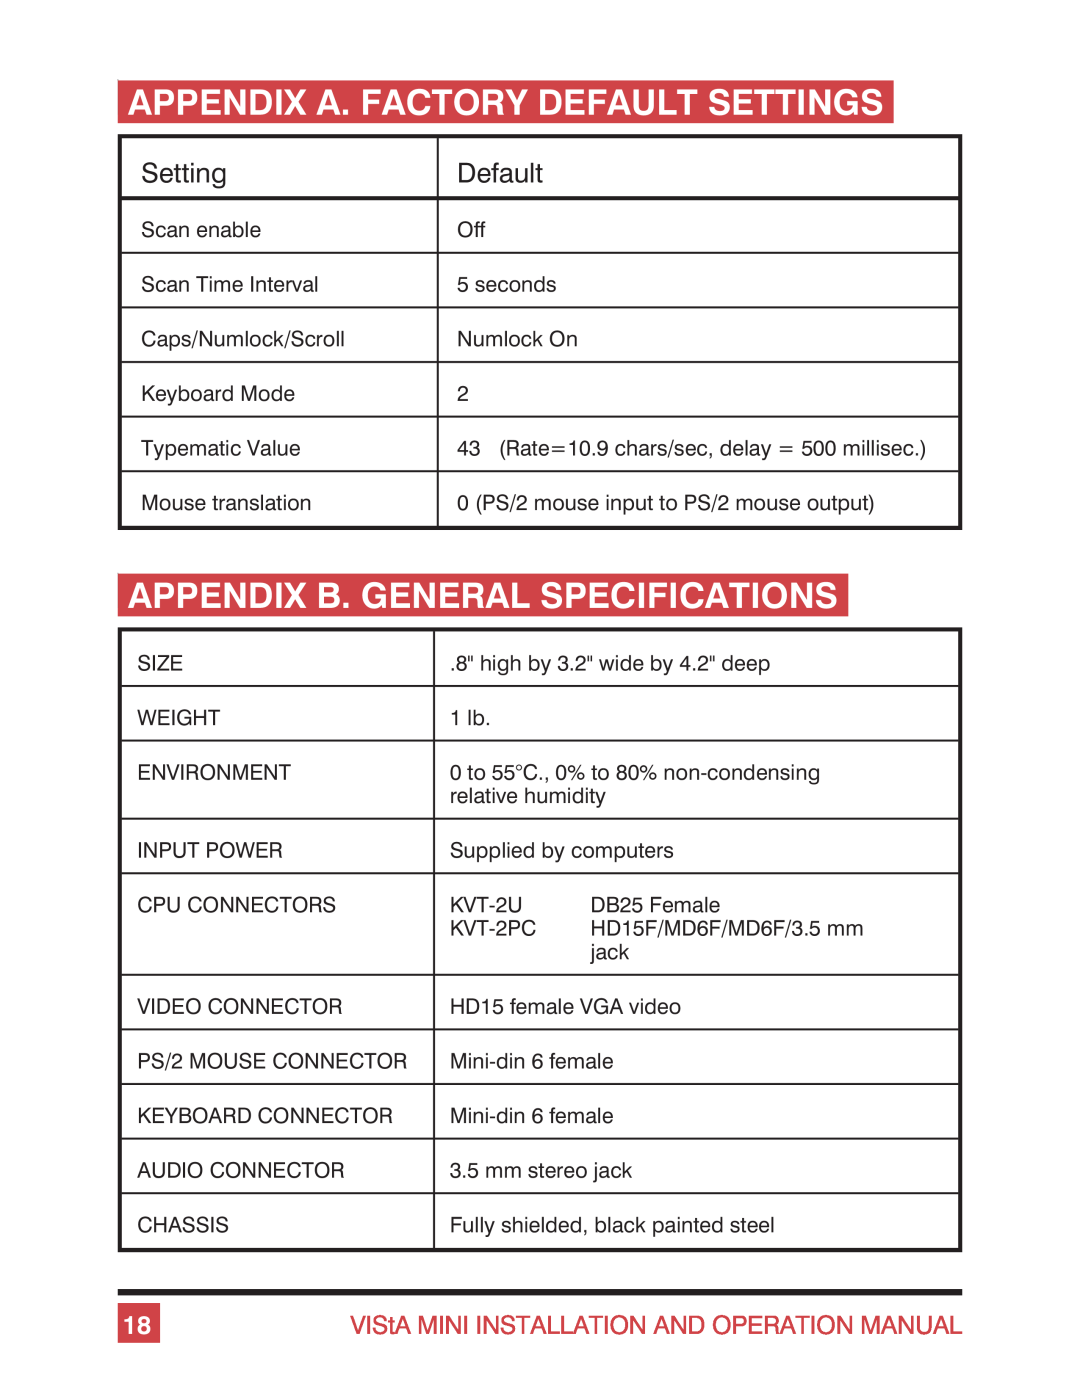 Rose electronic Vista Mini operation manual Appendix A. Factory Default Settings, Appendix B. General Specifications 